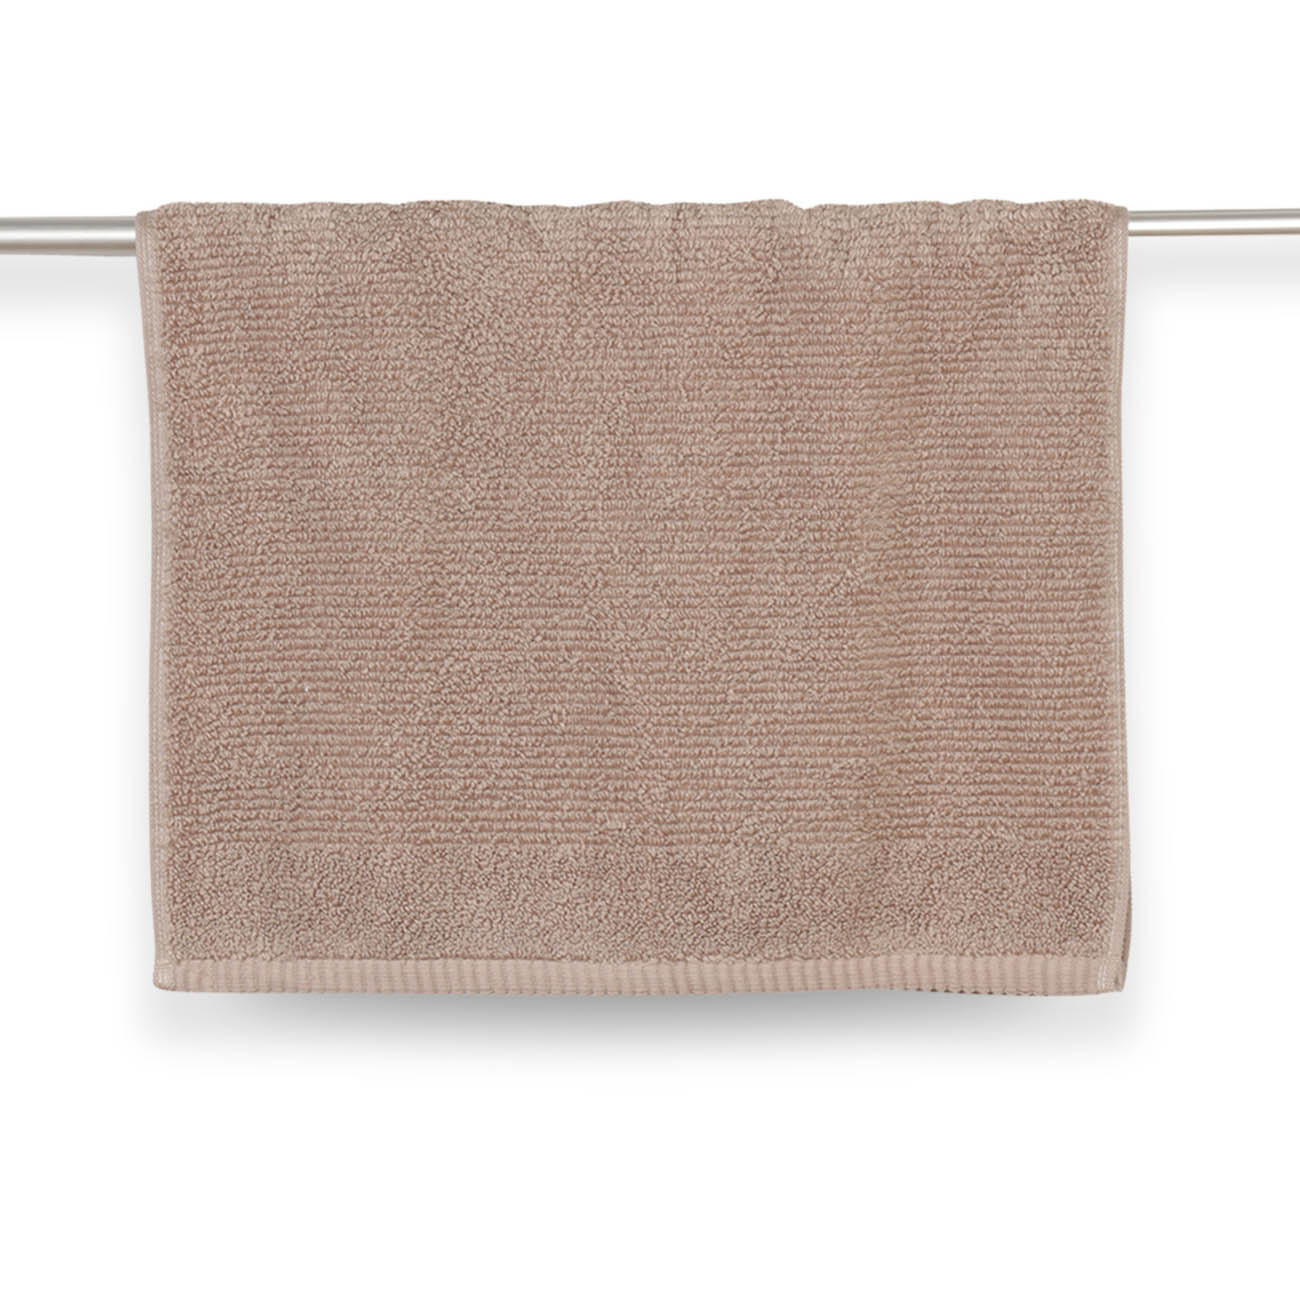 Towel, 40x60 cm, cotton, brown, Terry cotton изображение № 2